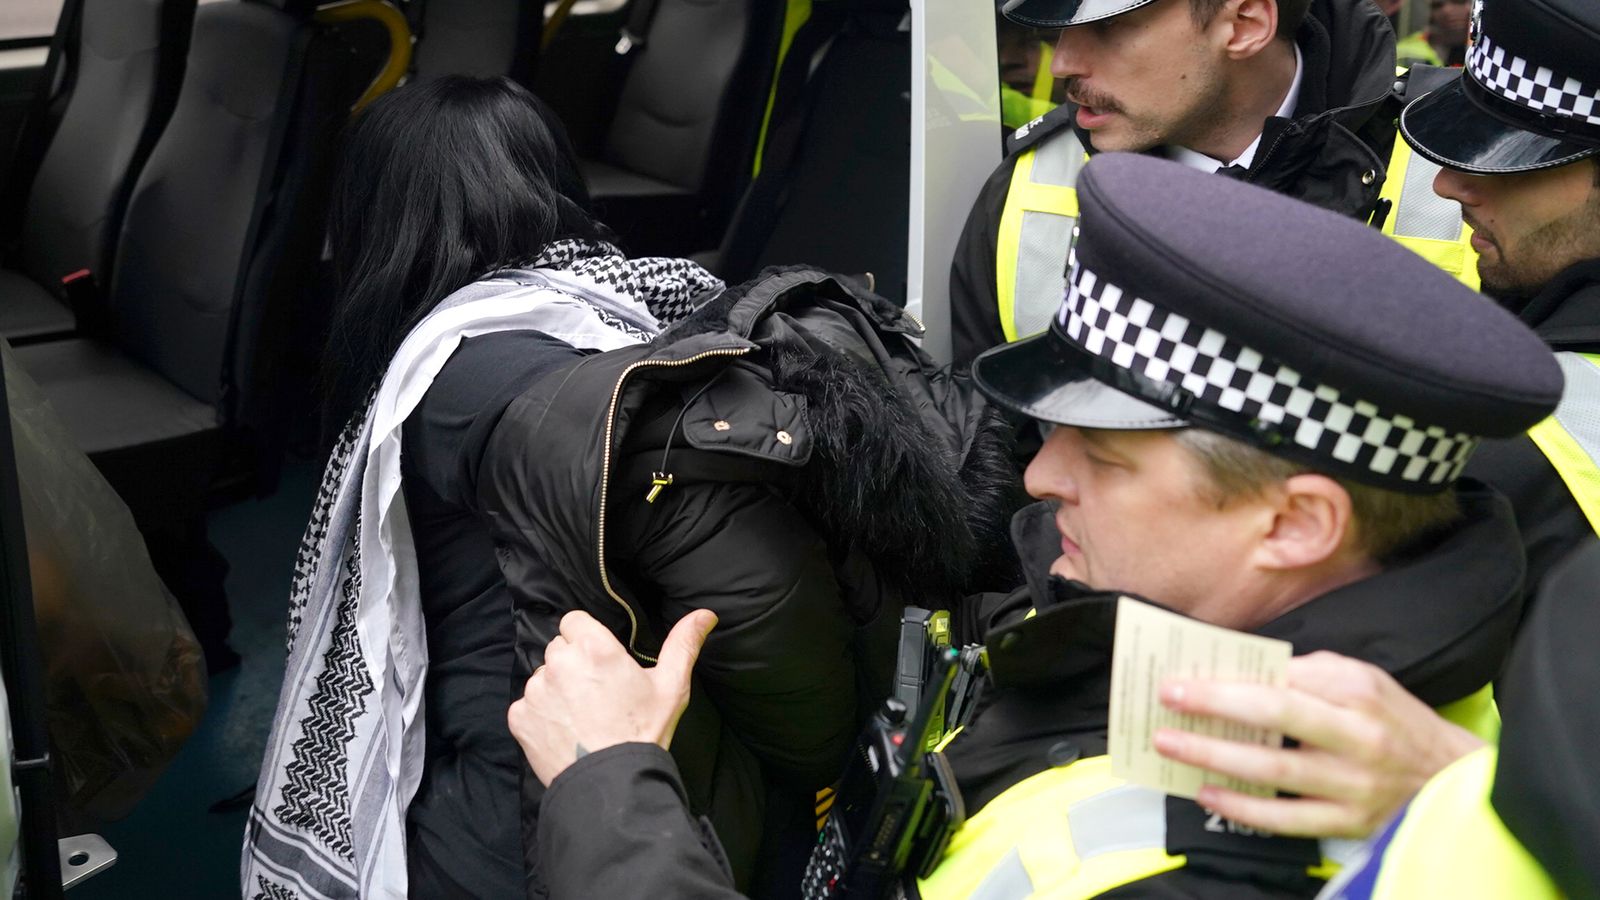 London Police Xx Video - Twelve people arrested at pro-Palestine demonstration in London | UK News |  Sky News